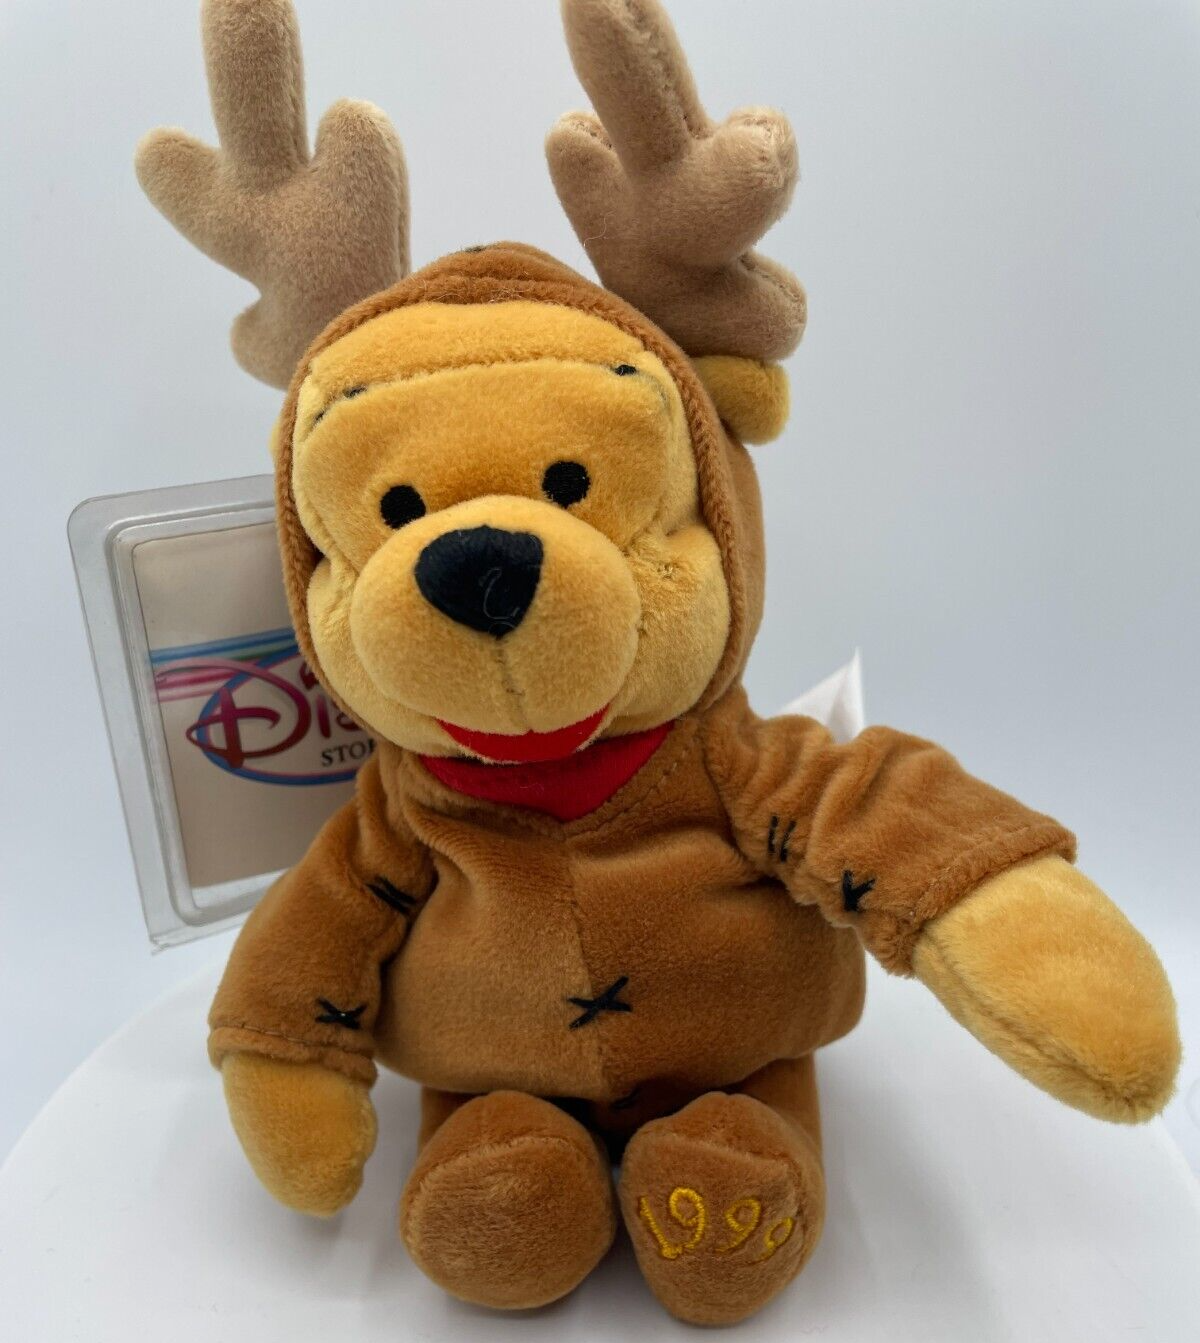 Winnie The Pooh Disney Store Mini Bean Bag Reindeer Plush with Tag 1999 - $3.79